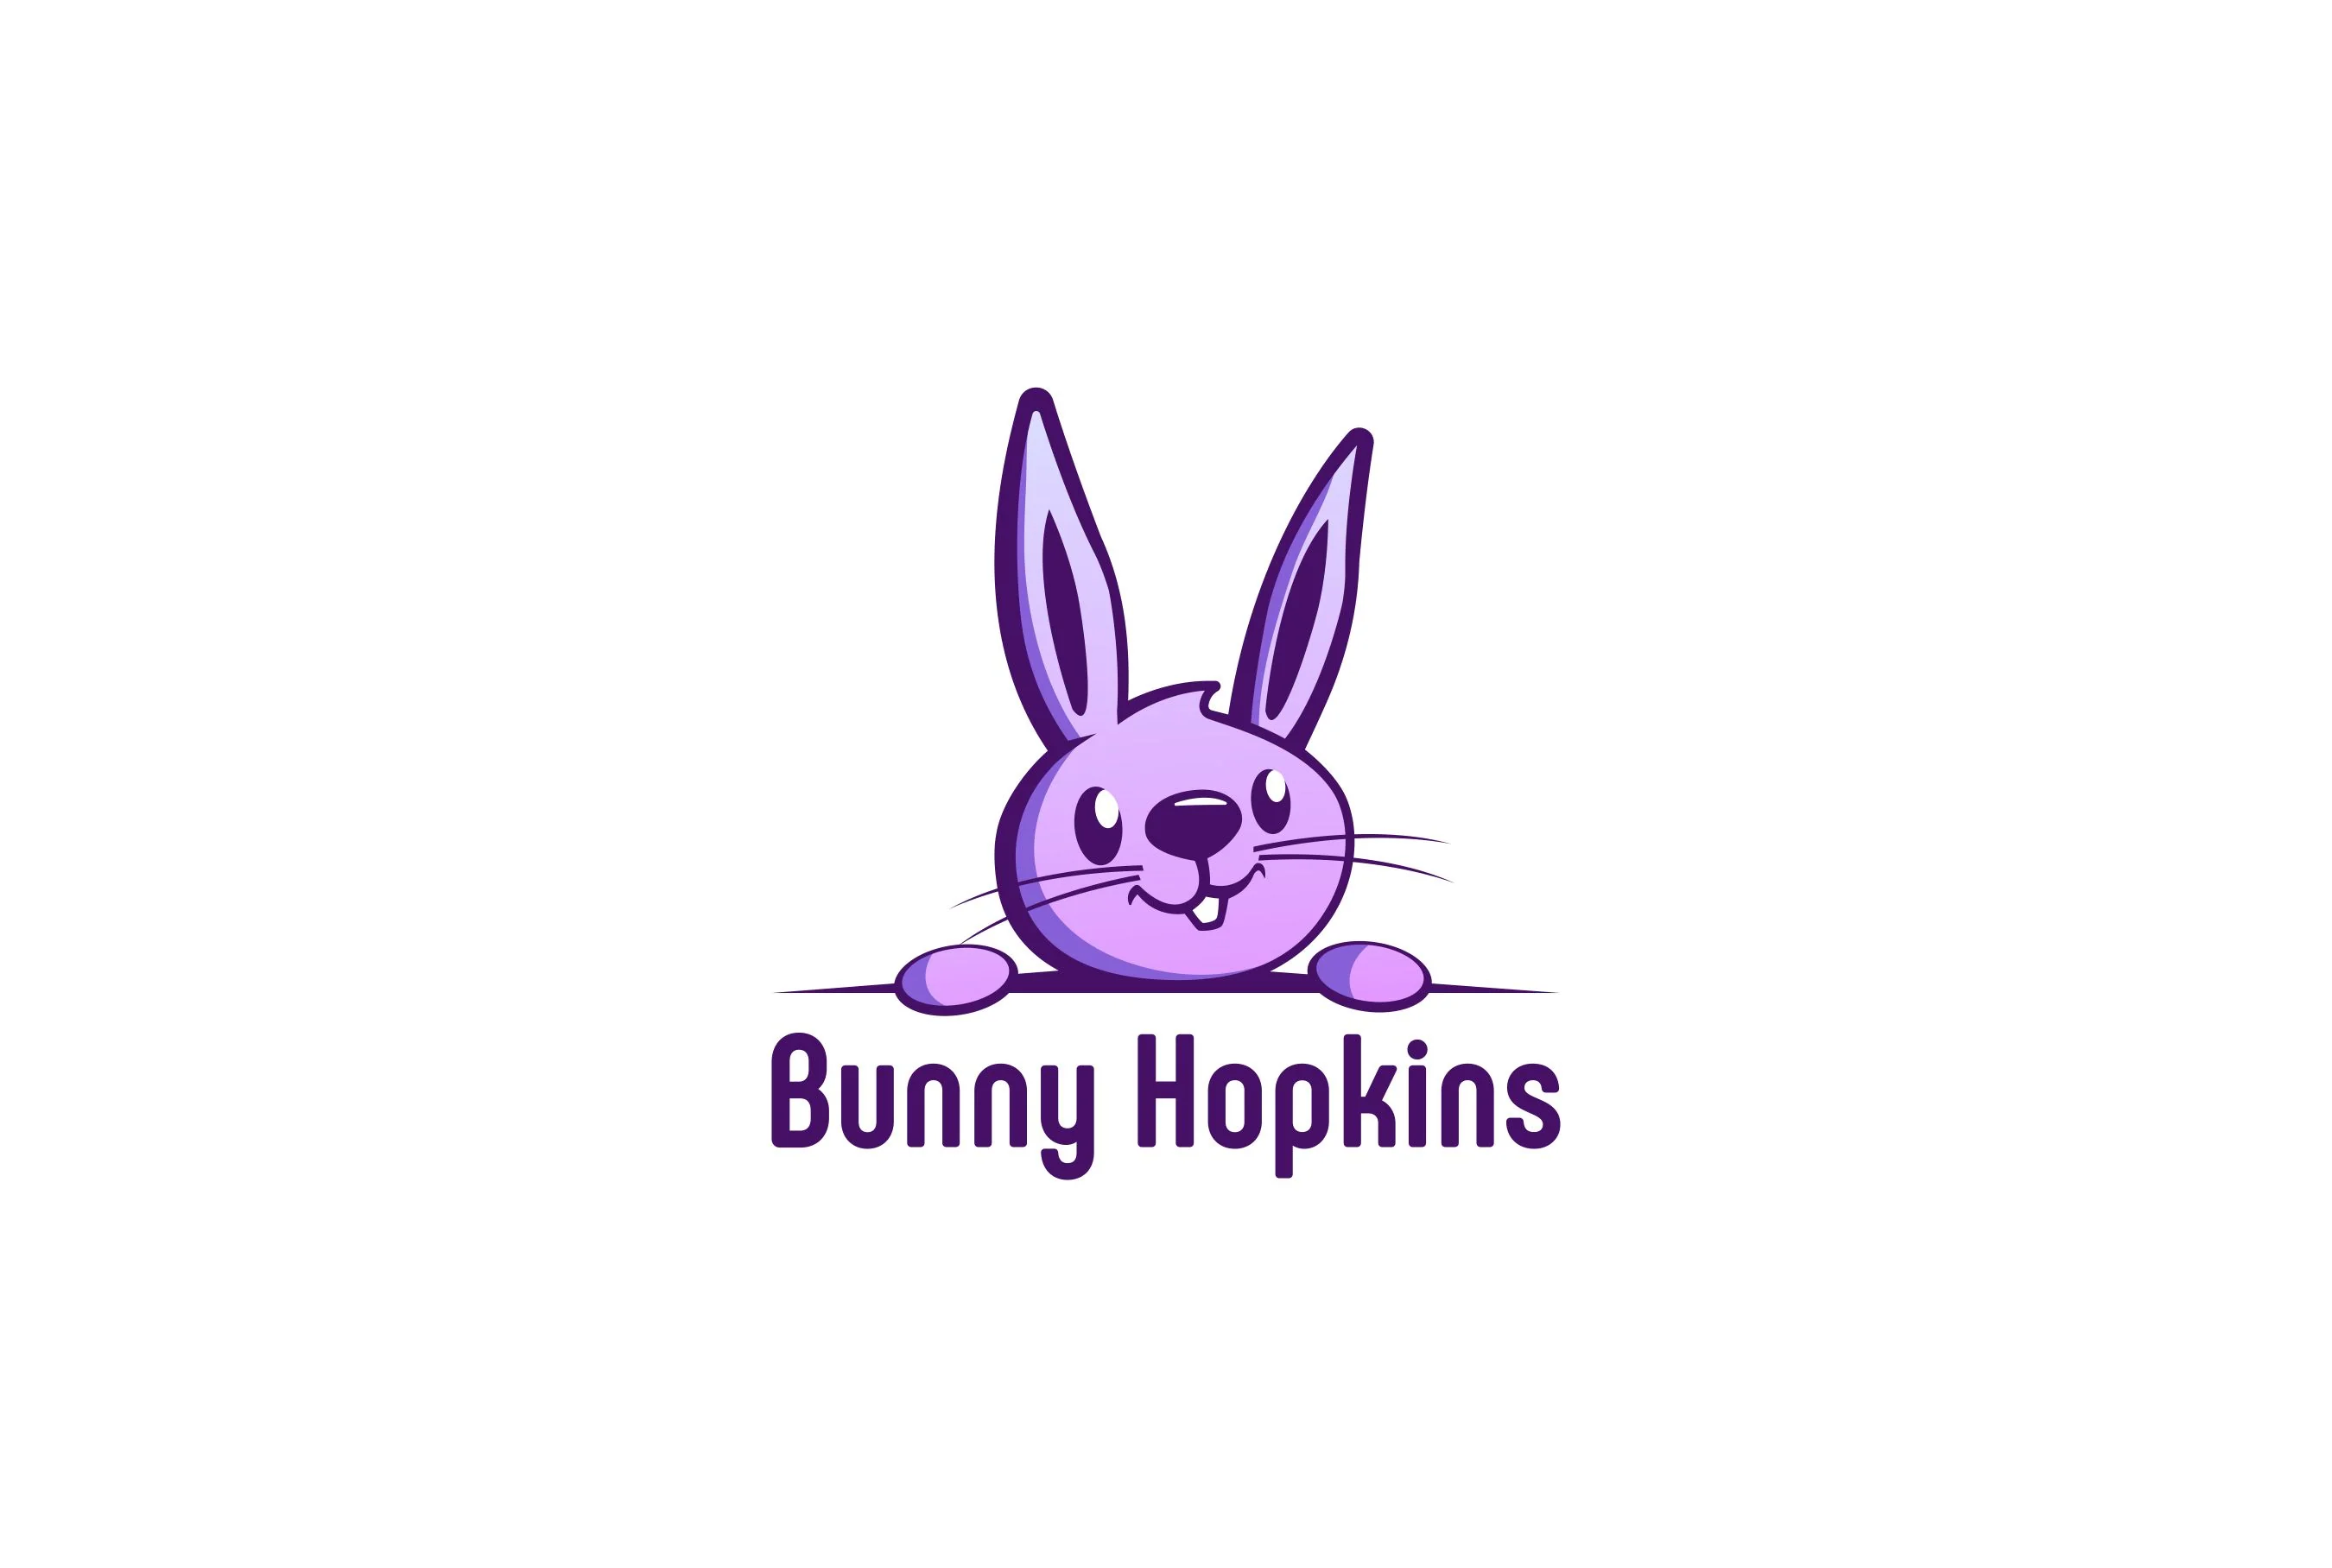 https://39848483.fs1.hubspotusercontent-na1.net/hubfs/39848483/Dropship%20Brand%20Logos/Bunny%20Hopkins.png-1